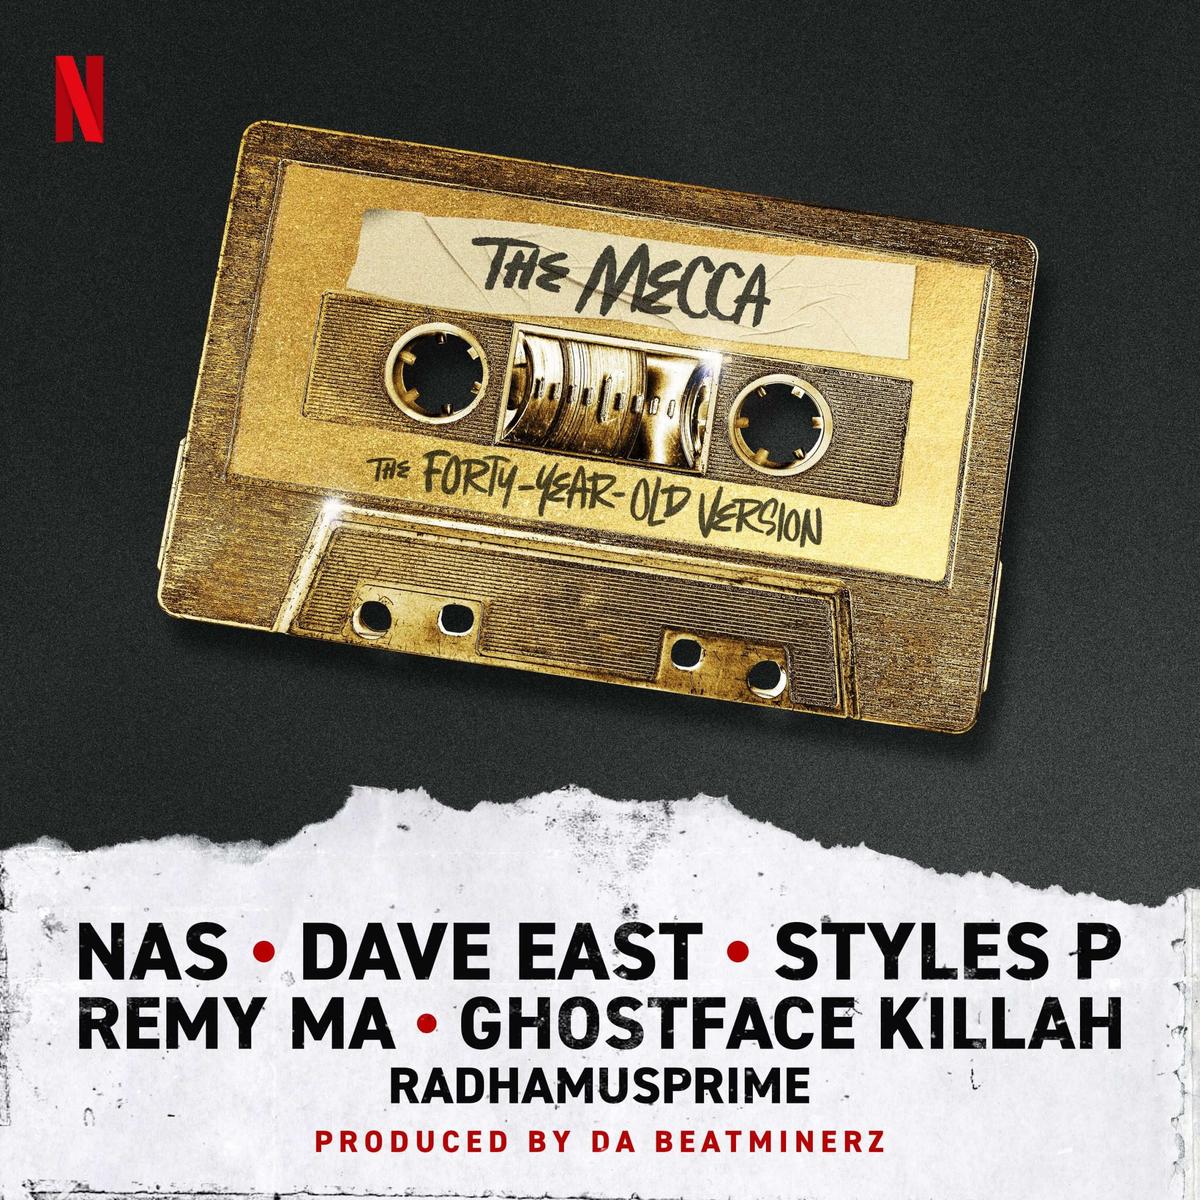 Styles P, Ghostface Killah, Remy Ma, Nas, Dave East & RahdaMUSprime Unite For “The Mecca”